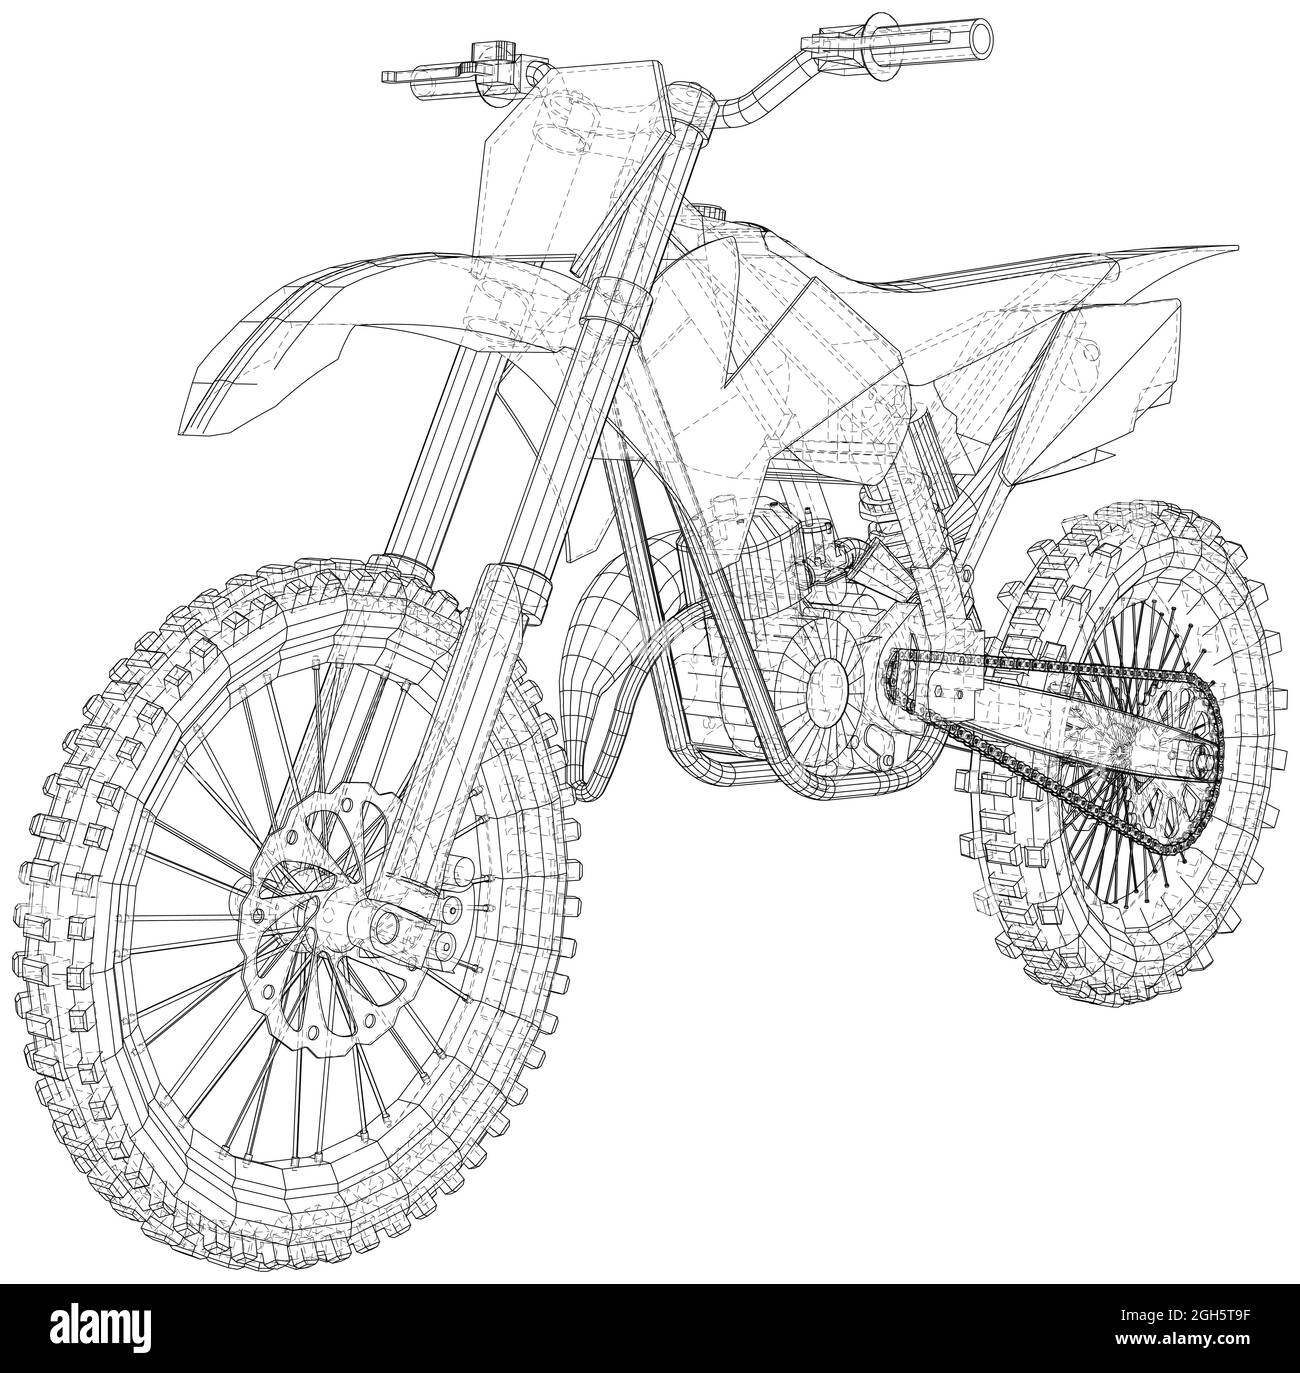 Motorcycle Art Commissions | Motorcycle Drawings | Bike Art | Automotive Art